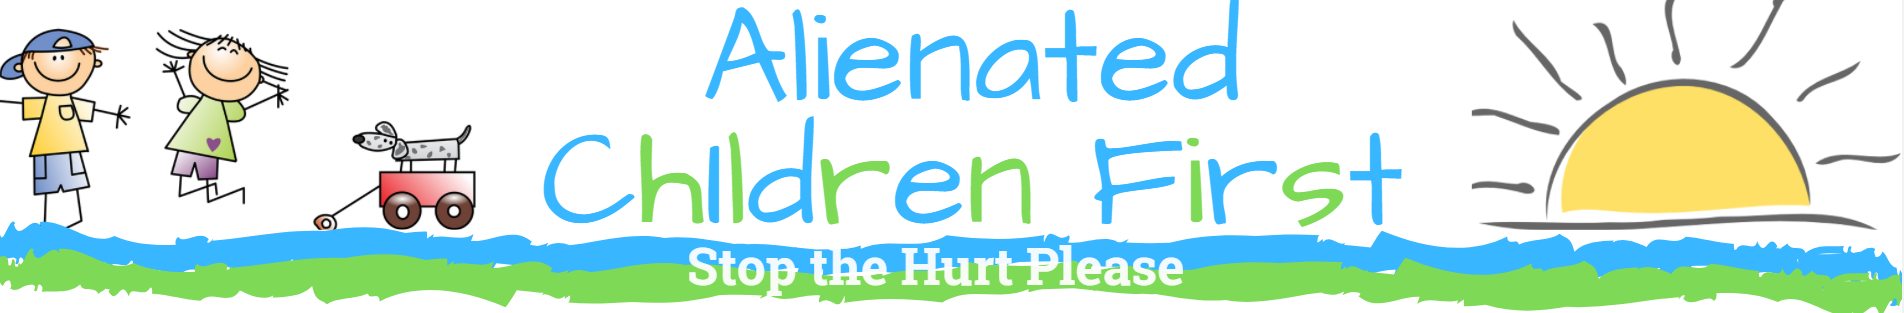 Alienated Children First – Stop the Hurt